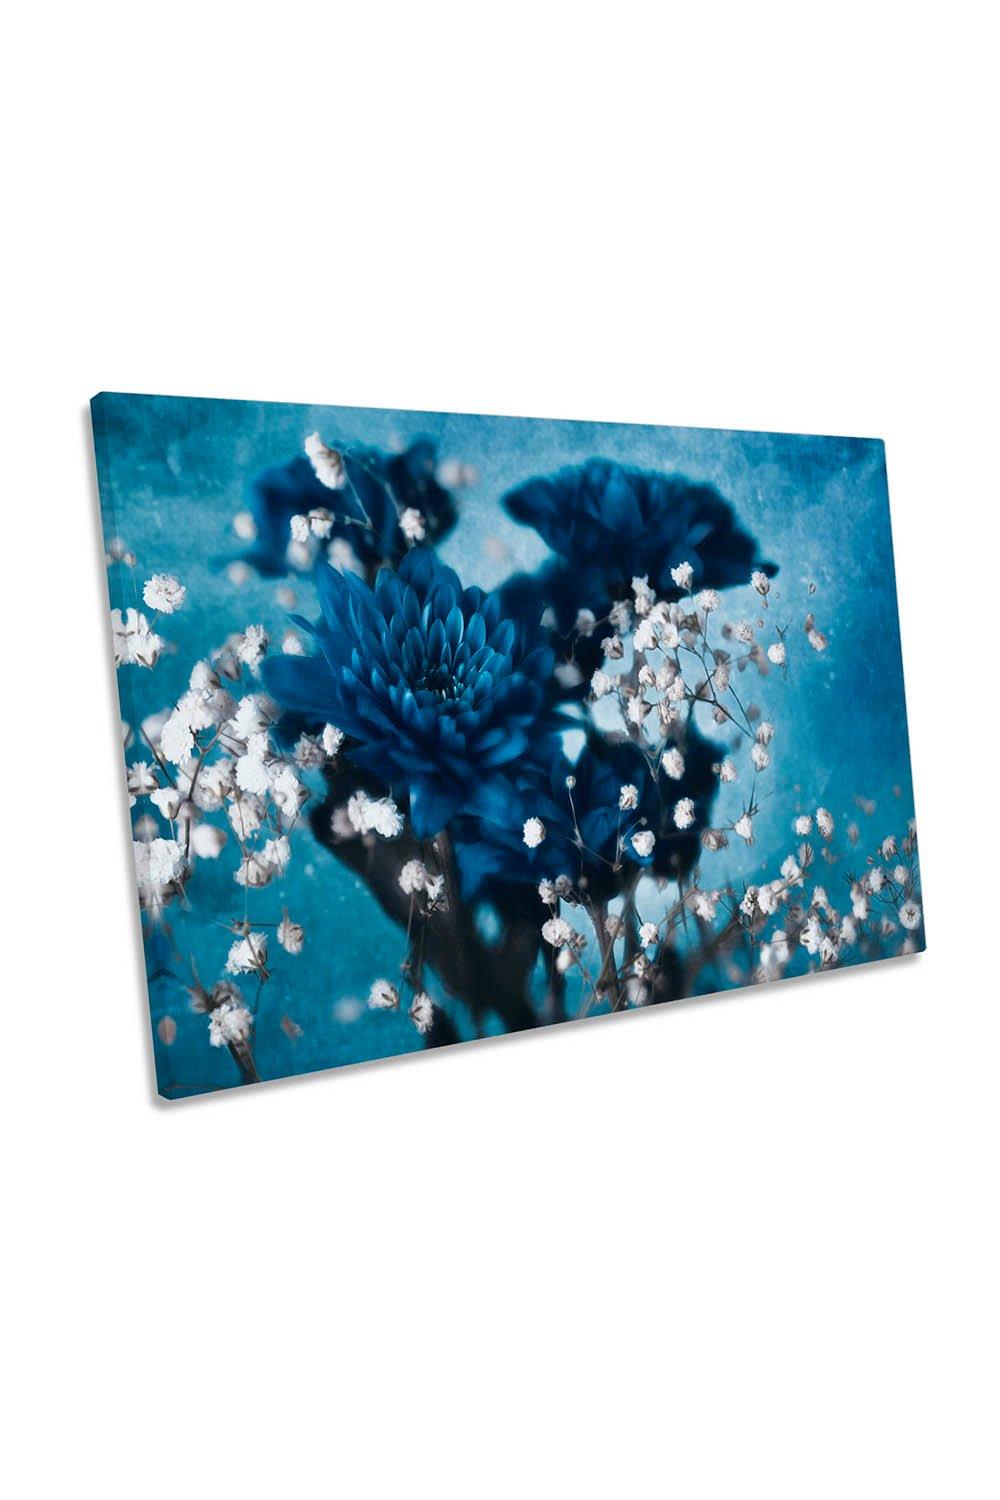 Dahila Blue Flowers Floral Still Life Canvas Wall Art Picture Print